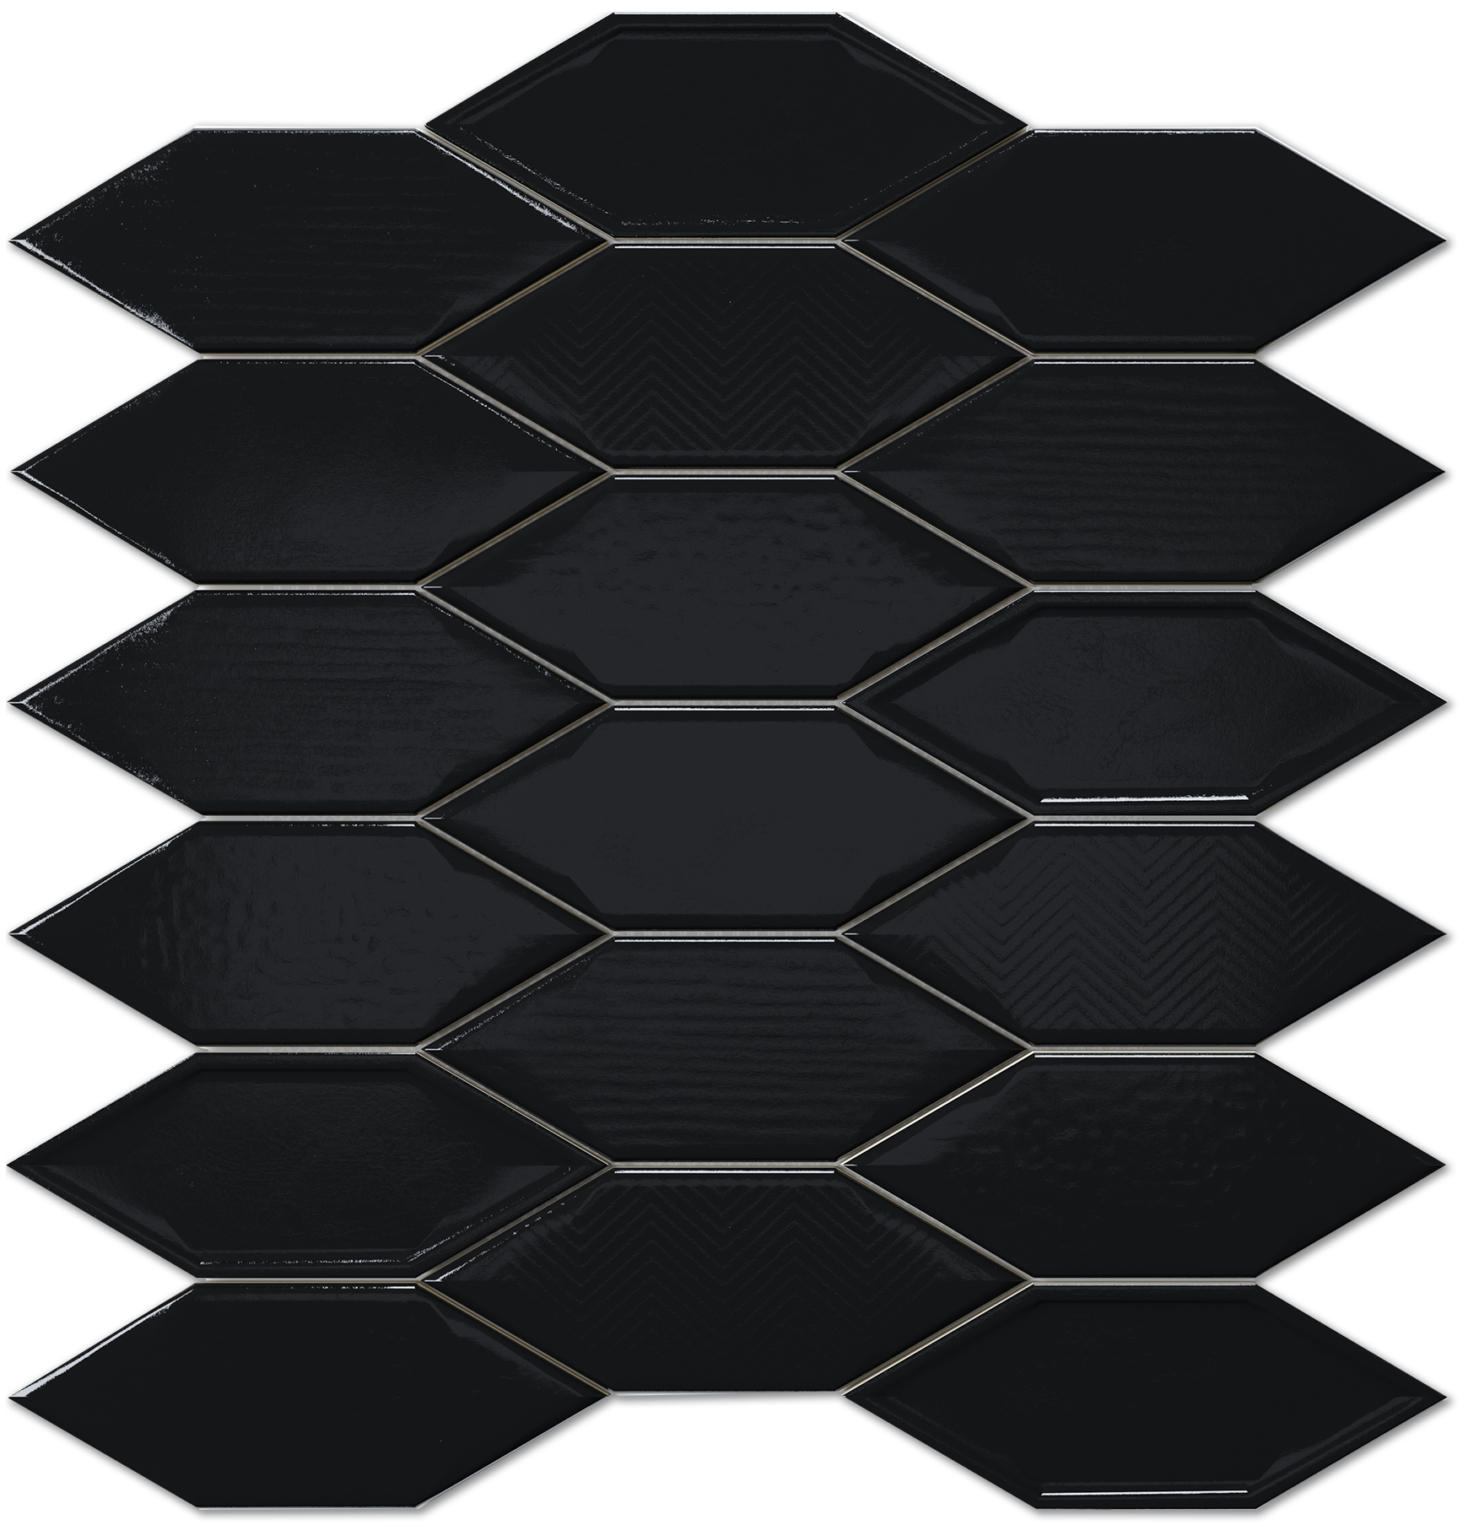 Picket Black Gloss Ceramic Pattern Mosaic- 4x2 Pickets on 11x11.5 Sheet